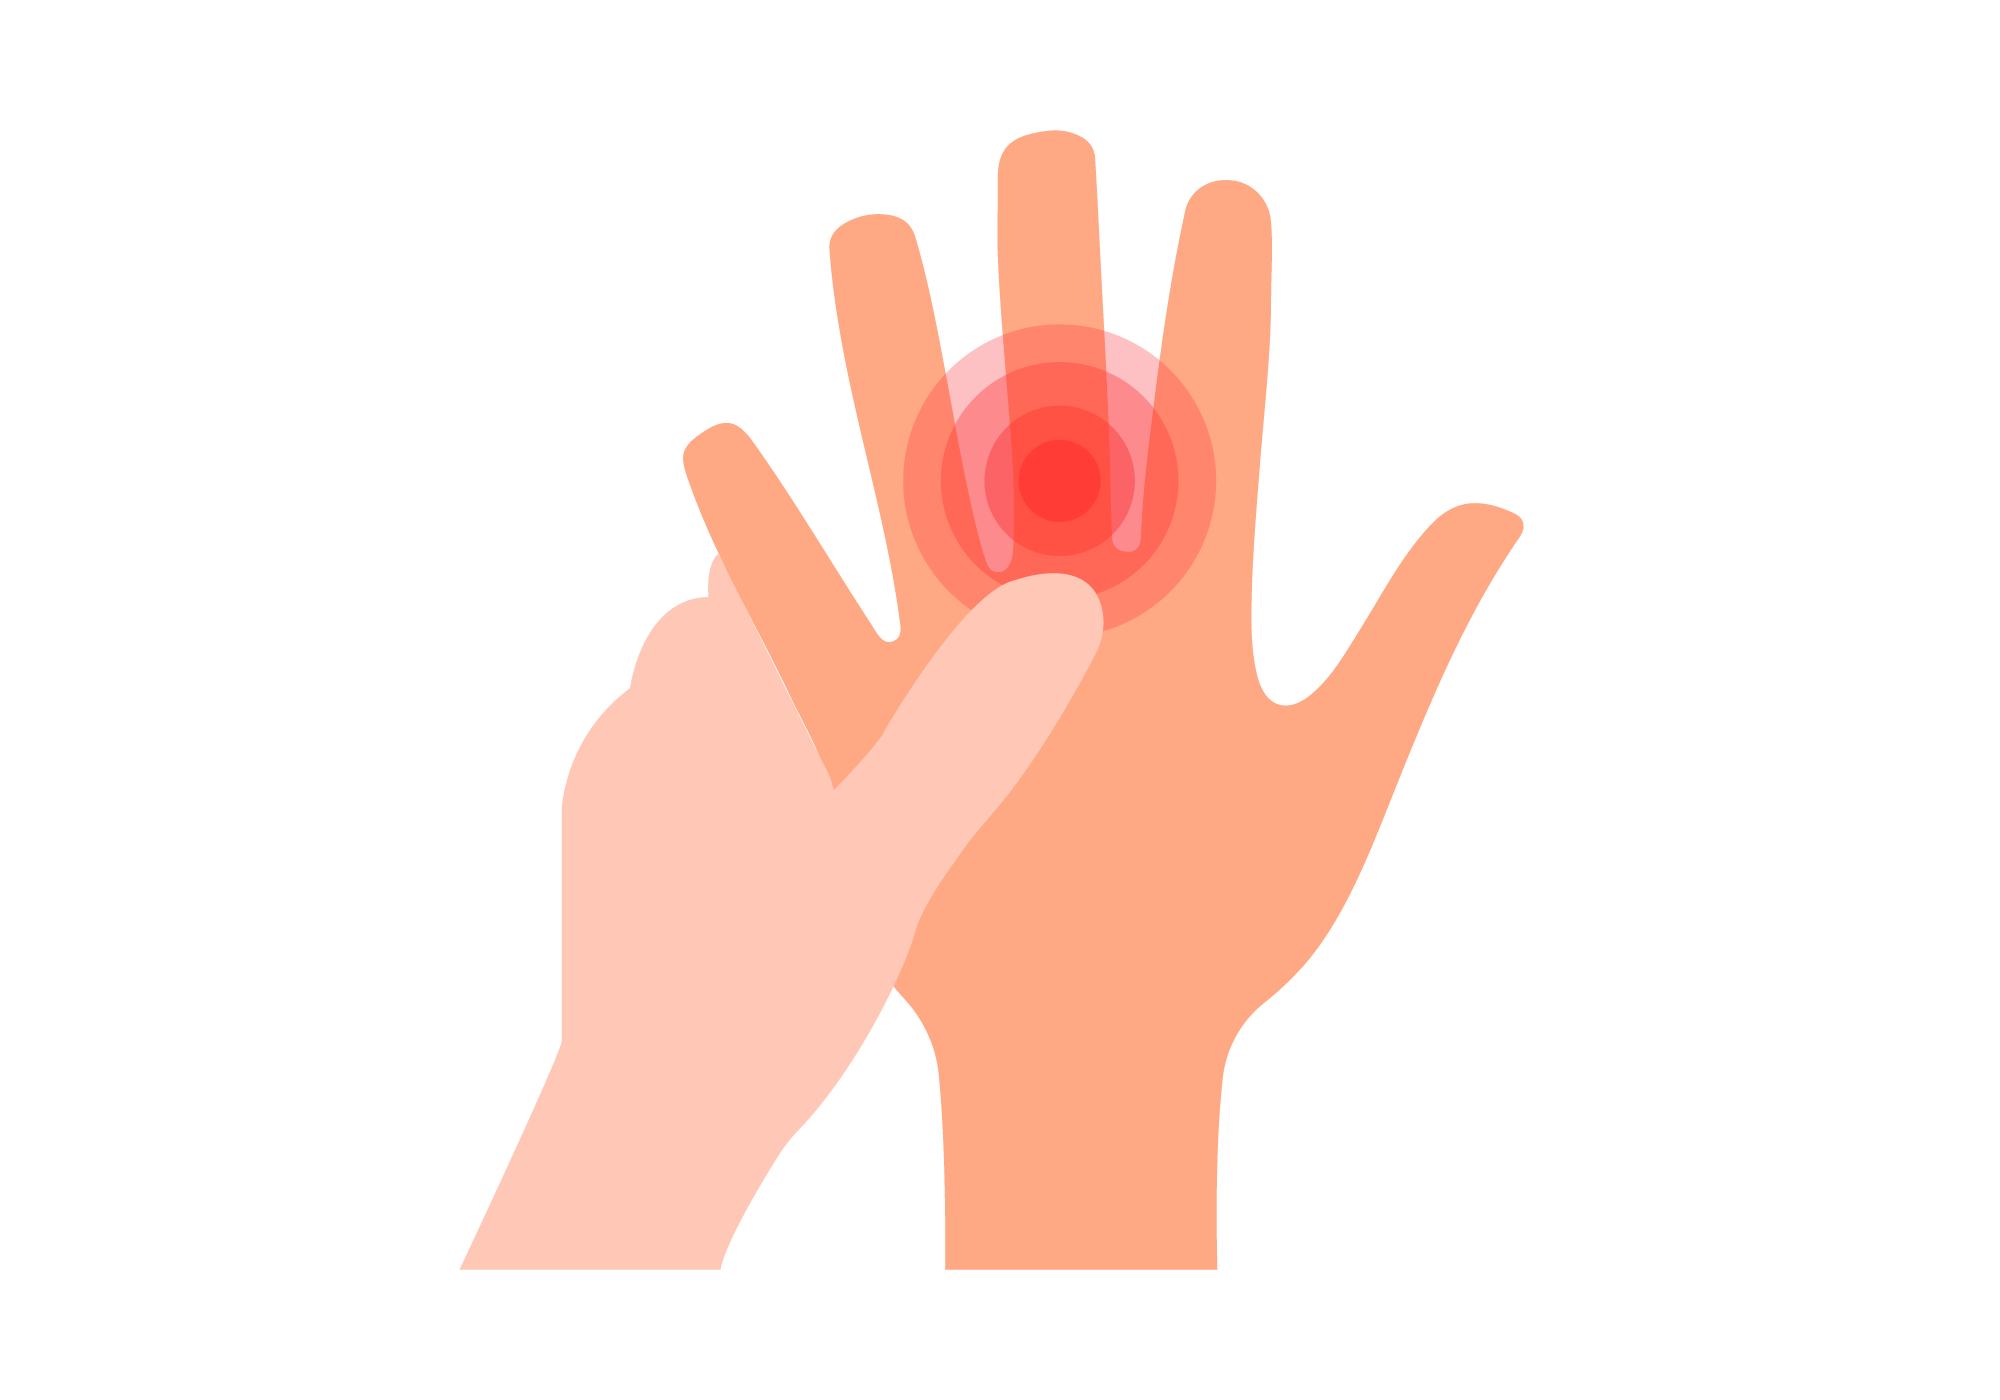 Trigger Finger: Symptoms, Causes, and Risk Factors